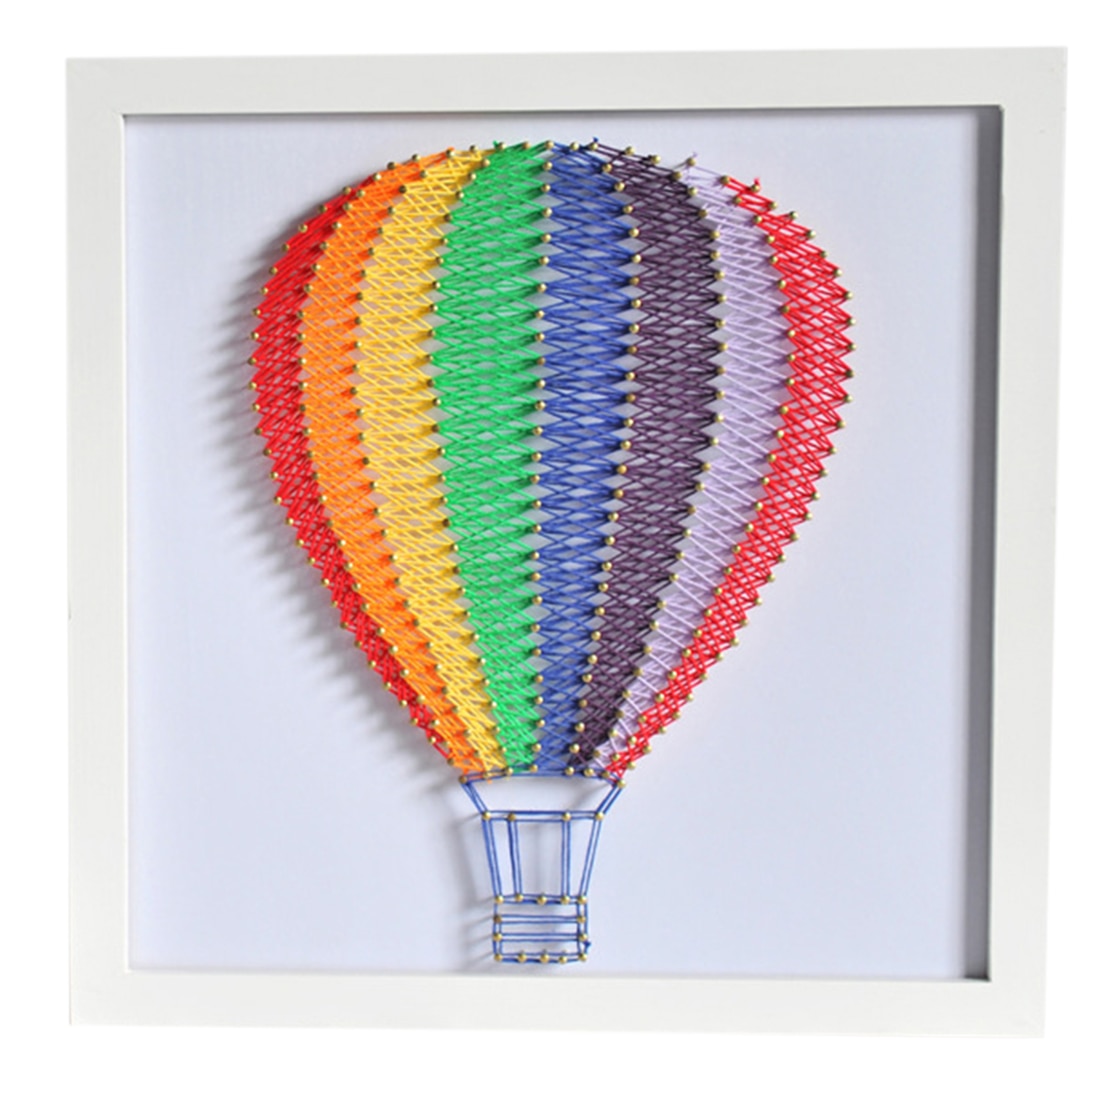 Diy Nail String Art Kit Luchtballon Kronkelende Lijnen Schilderen Art Kit Met Frame Home Decoratie Accessoires Voor woonkamer